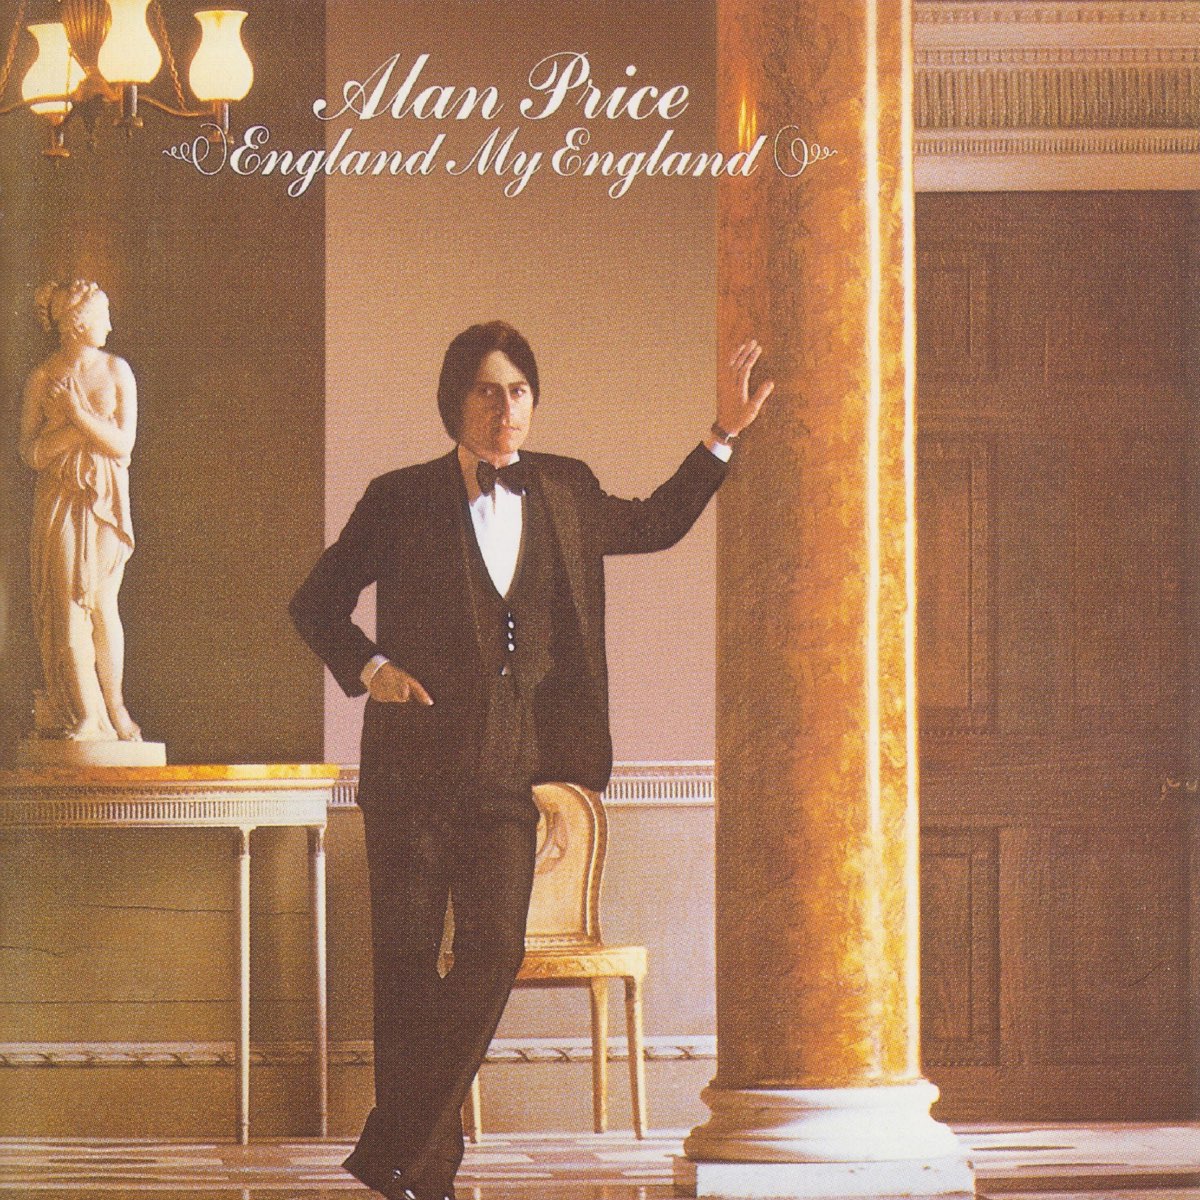 My england years. Alan Price England my England 1978. Alan Price England my England 1978 CD. Alan Price England my England 1978 Vinyl. Alan Price England my England 1978 Cover.